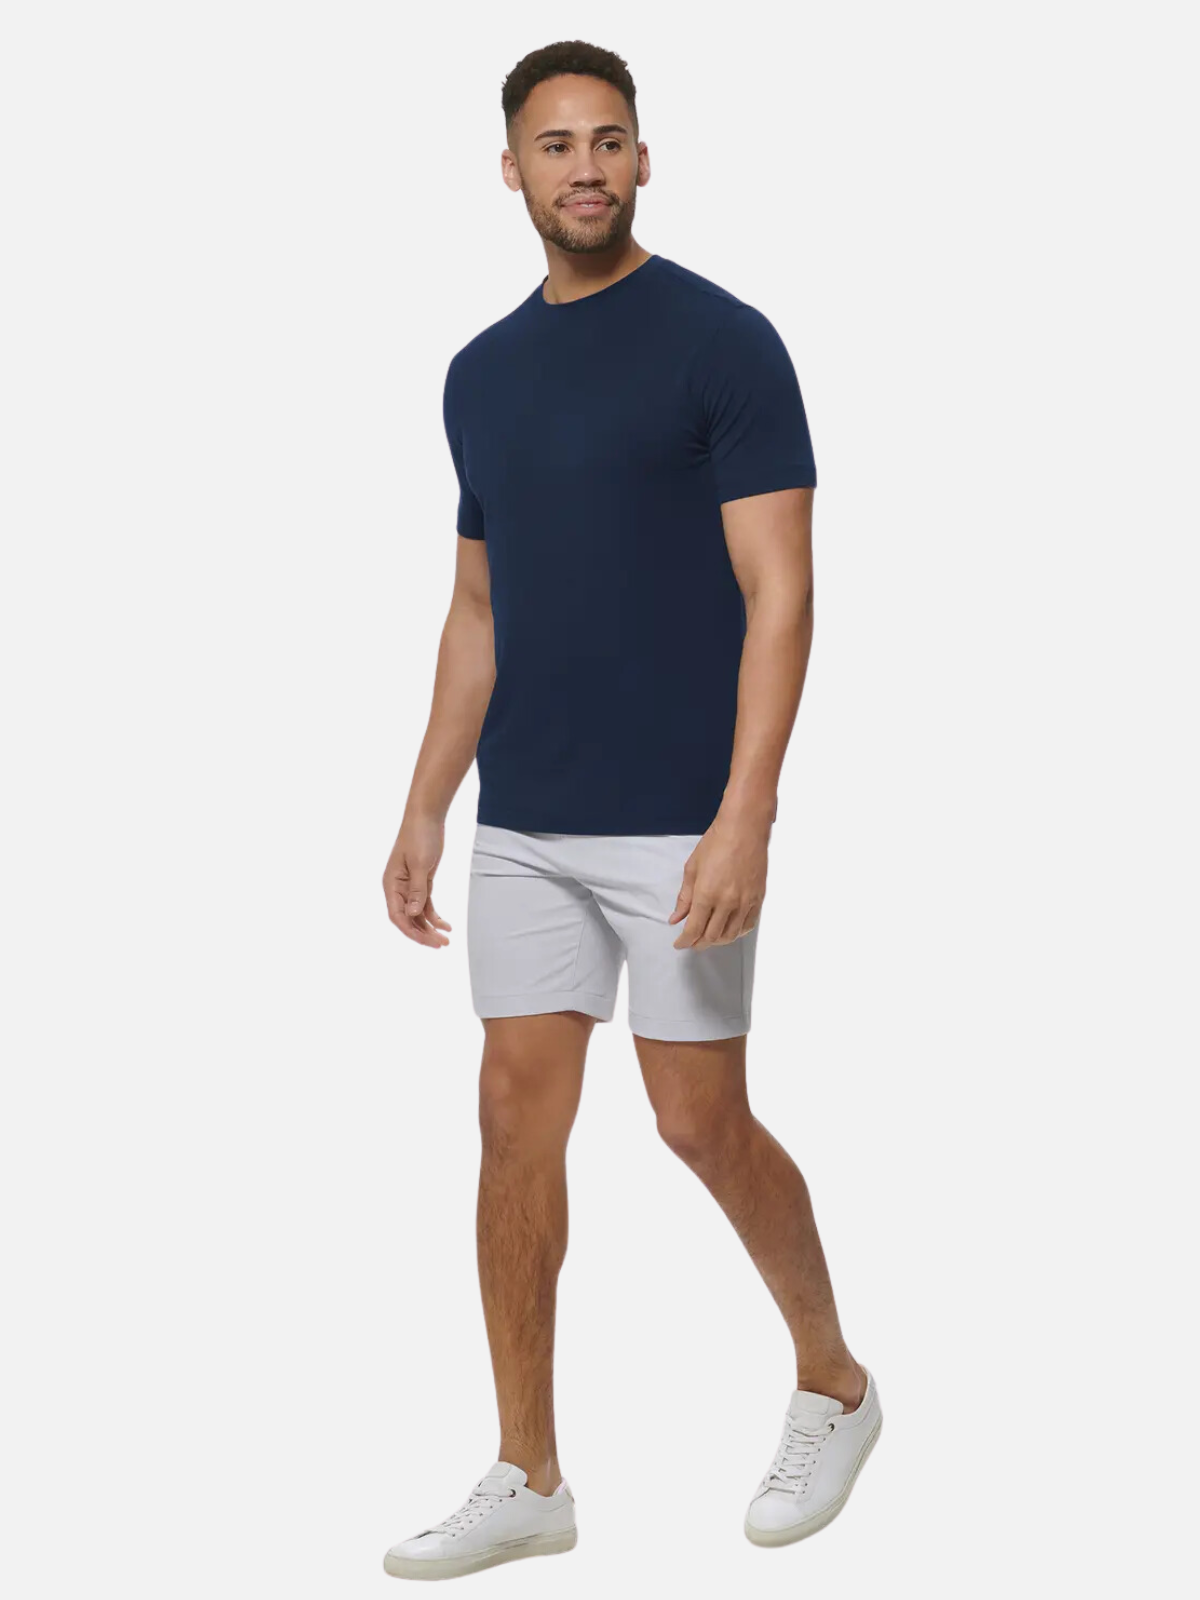 Mizzen and Main Knox Dry Fit T Shirt Navy Solid Kempt Mens Clothing Shop Athens Georgia UGA